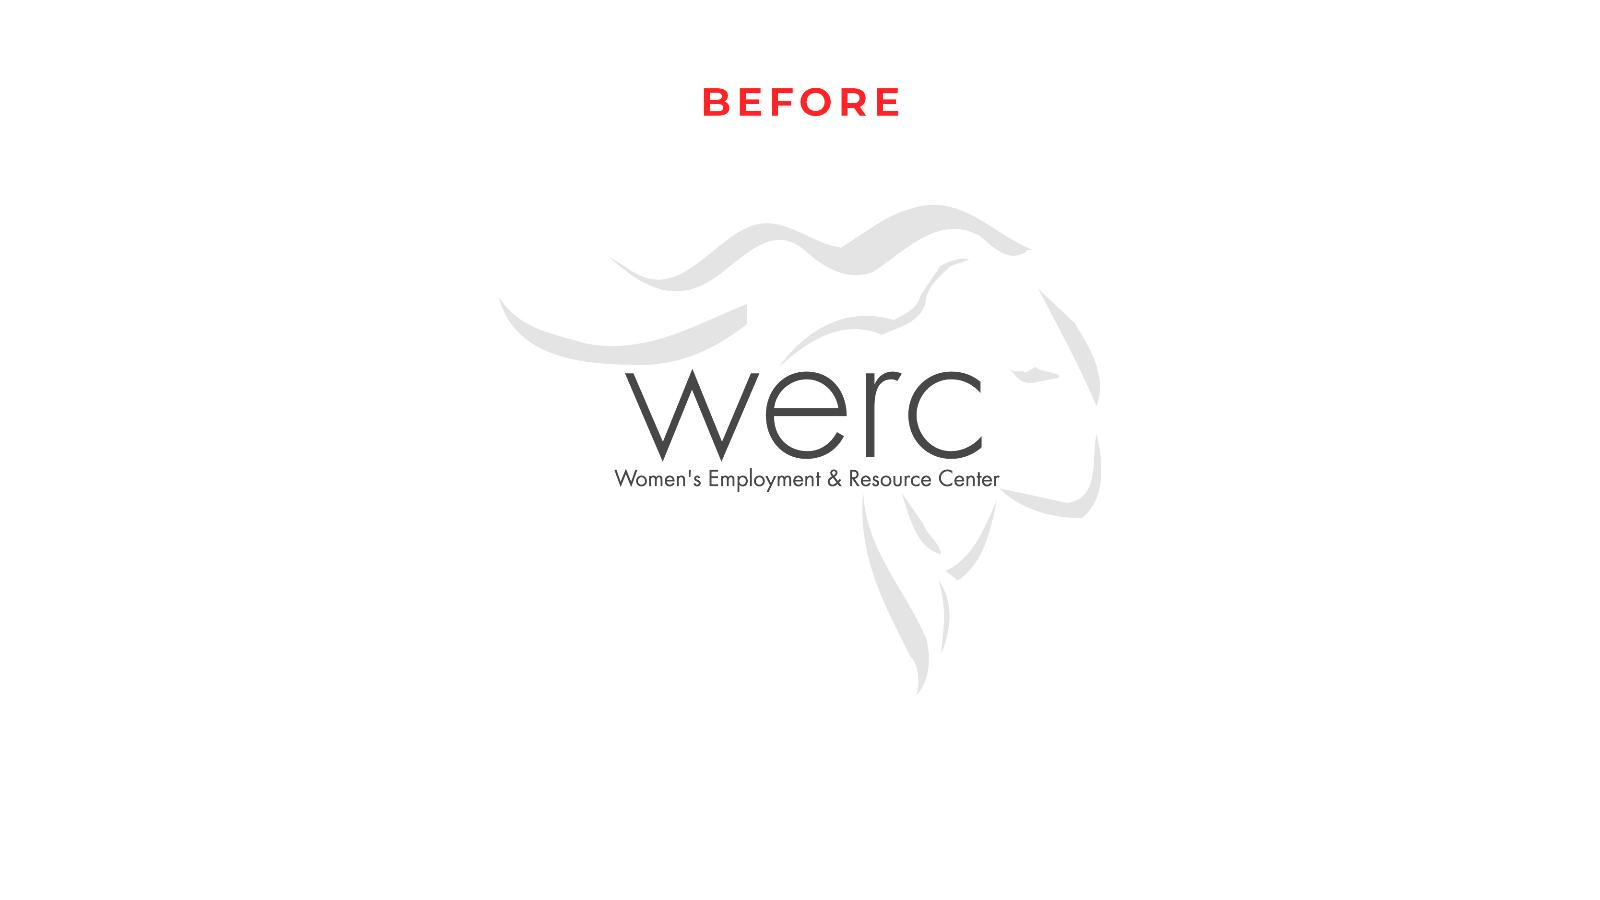 CDWERC | Before logo, grayscale